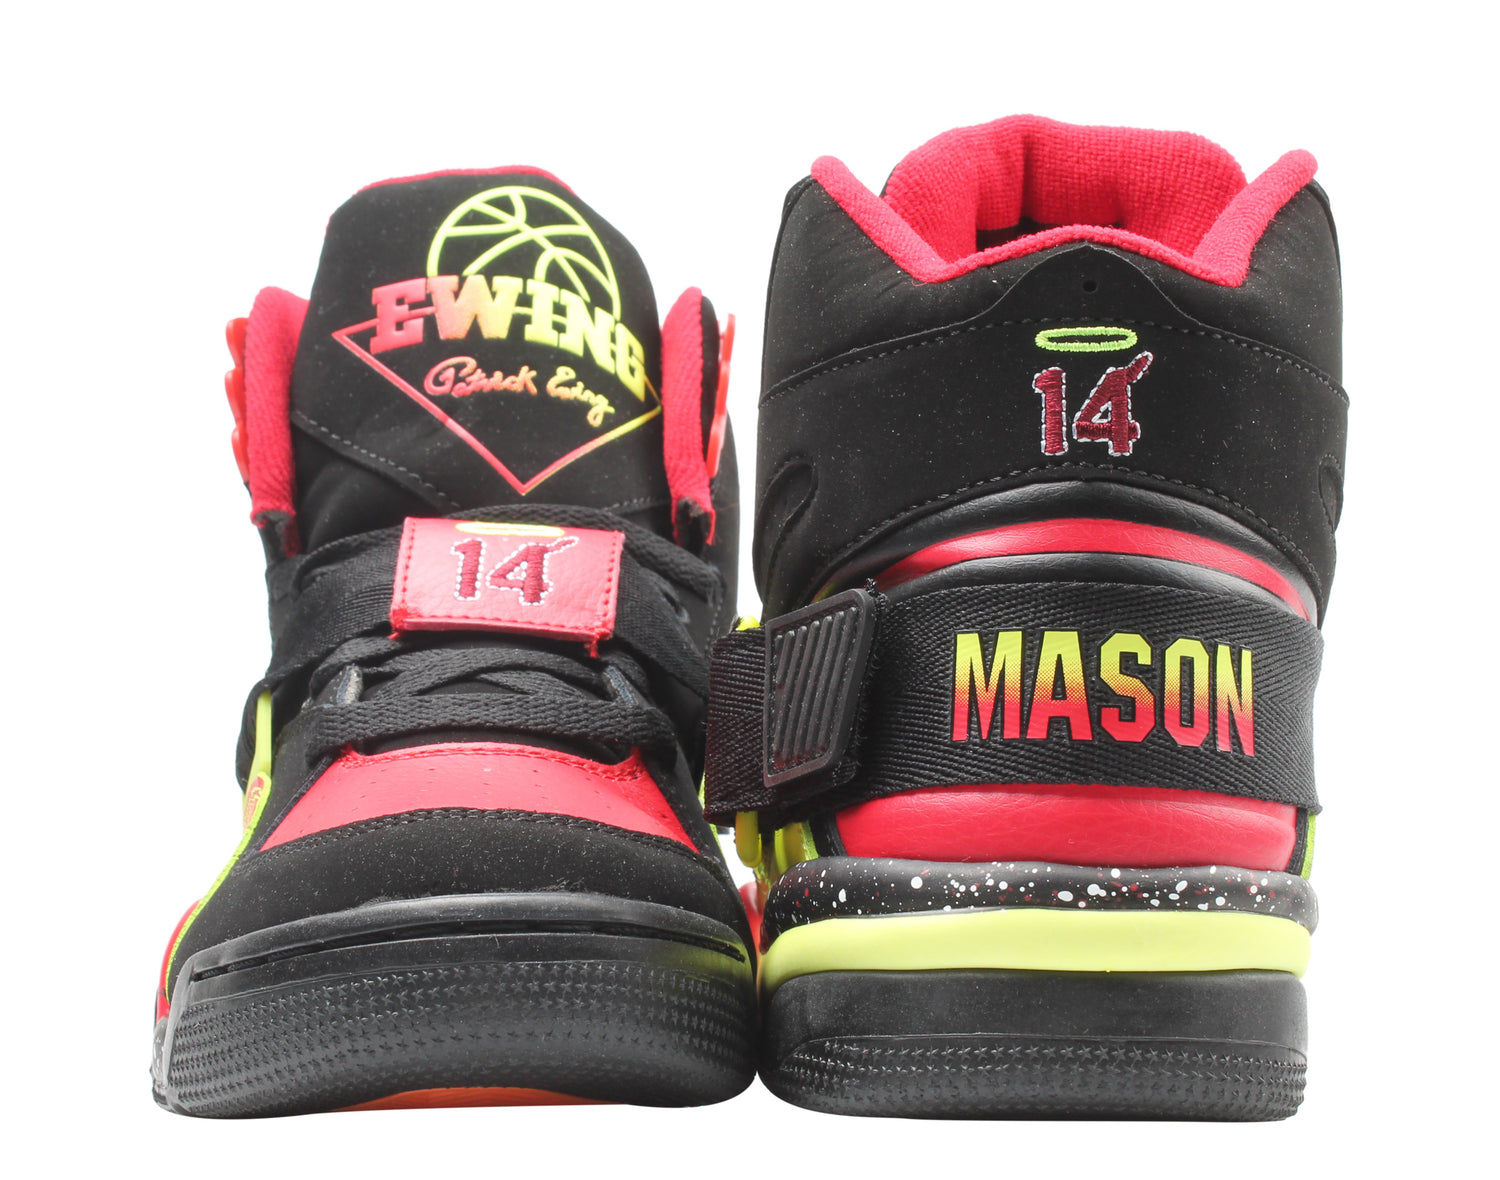 Ewing Athletics Ewing Concept x Anthony Mason Men's Basketball Shoes